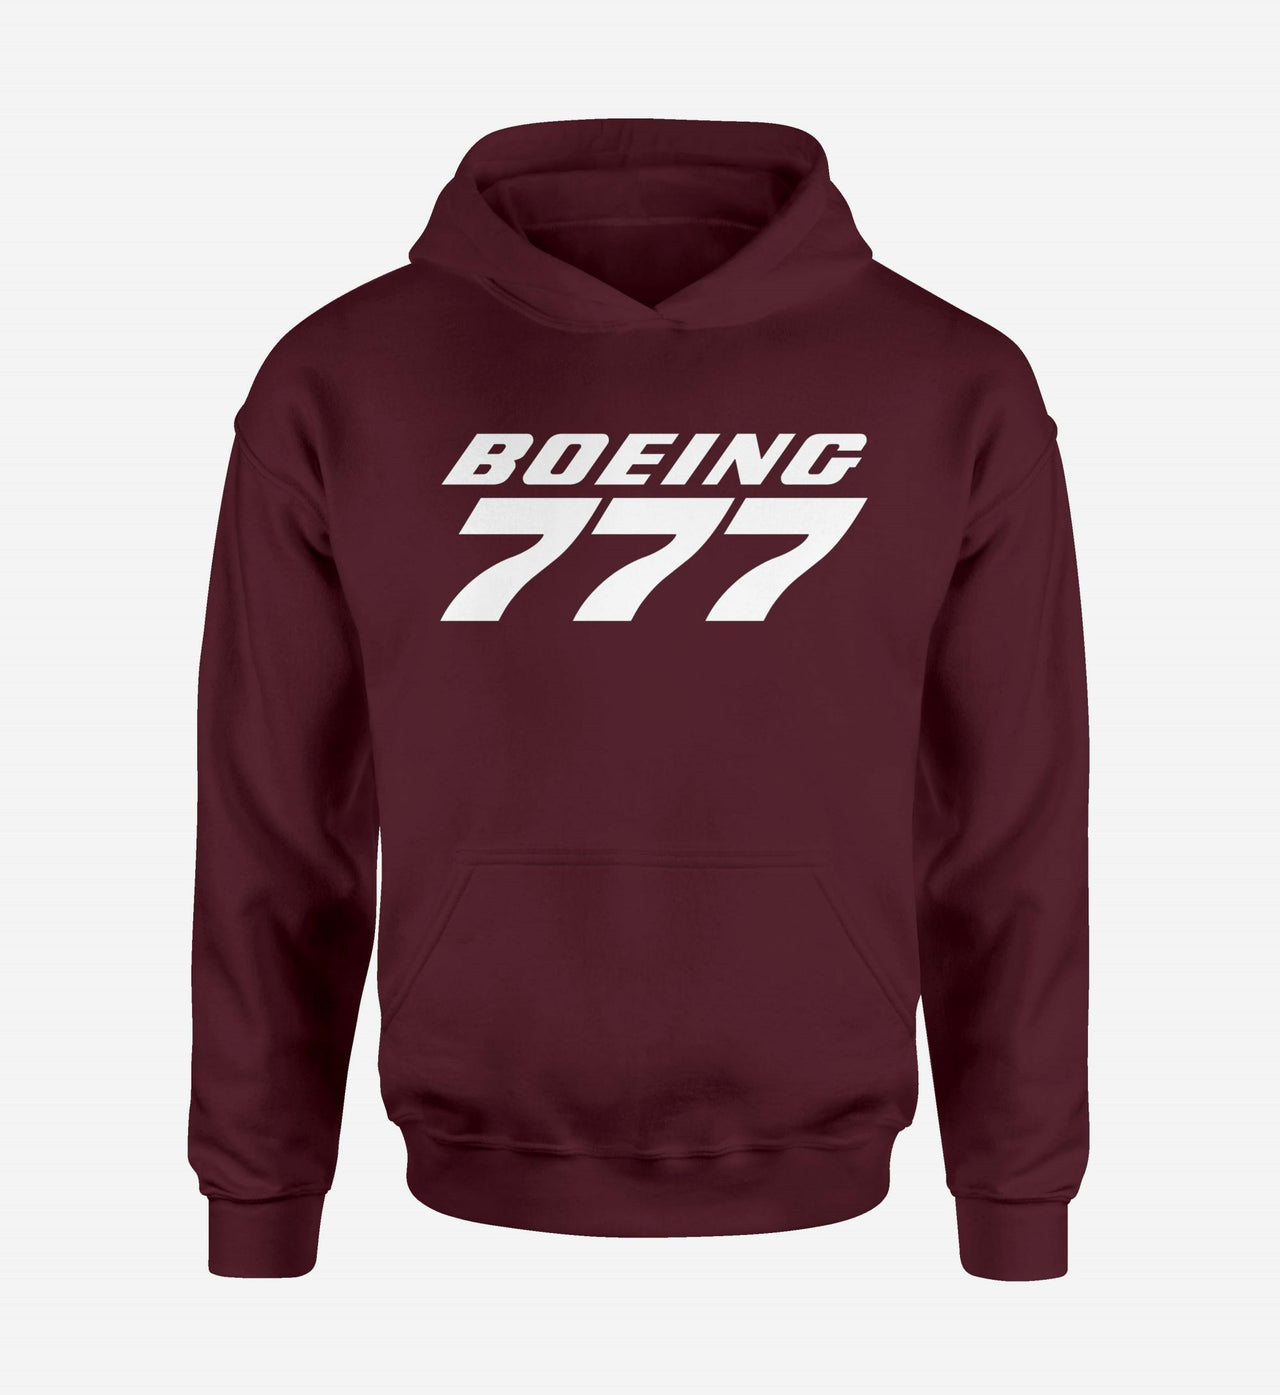 Boeing 777 & Text Designed Hoodies